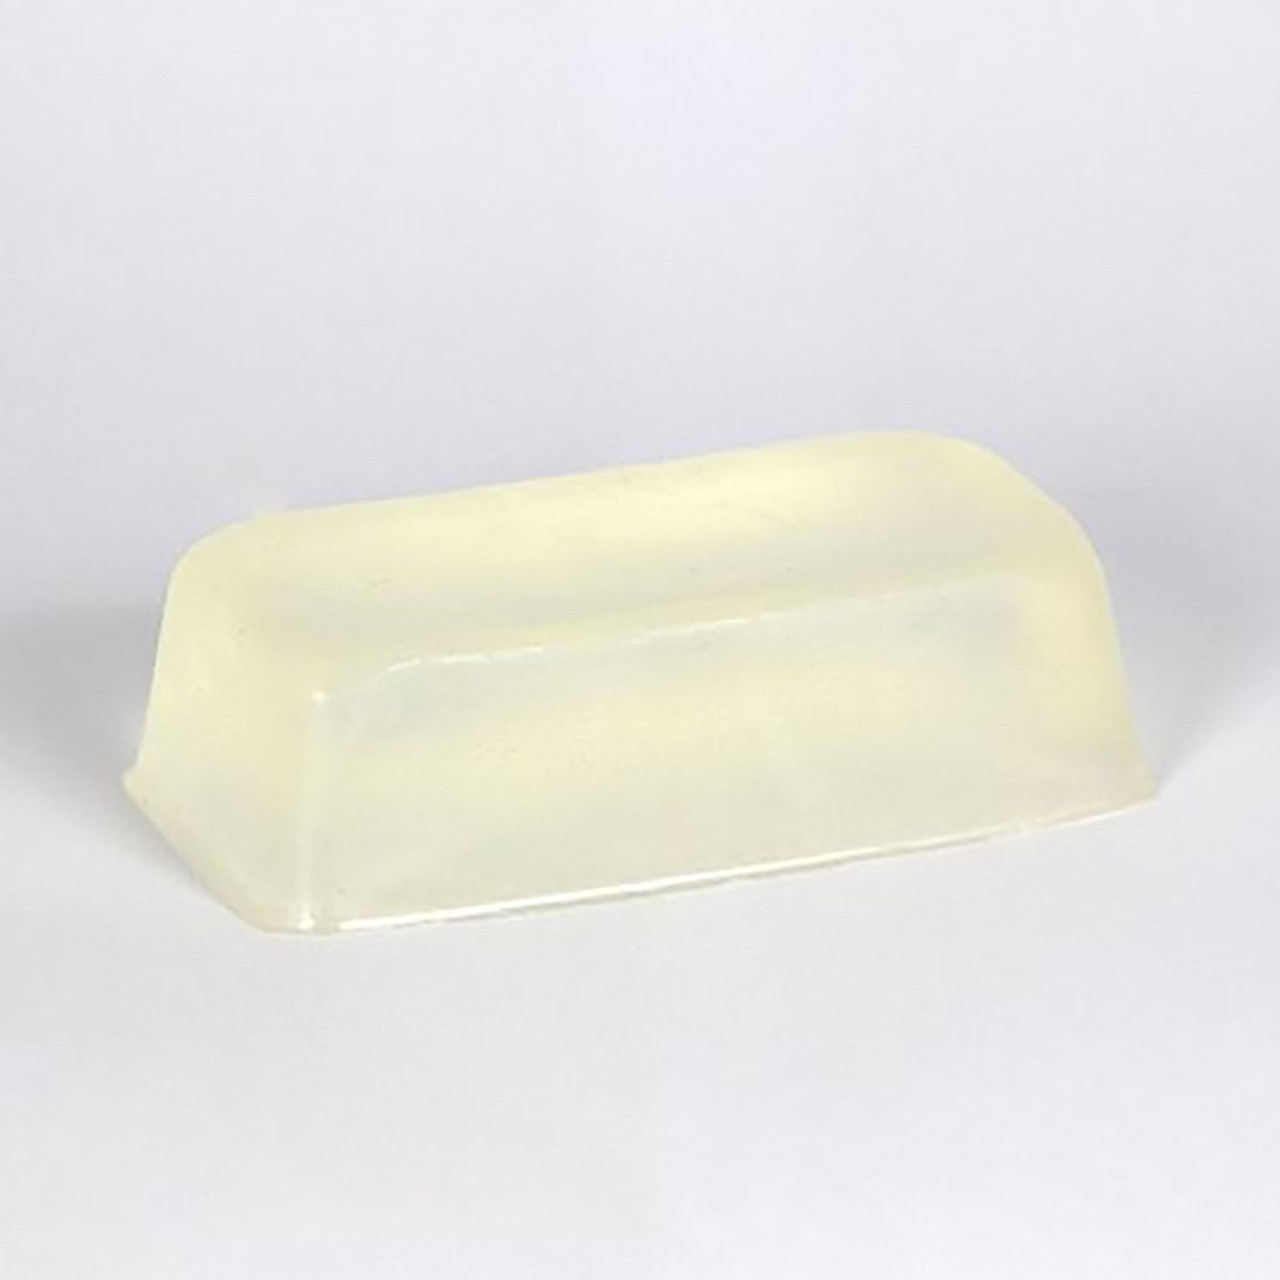 Basic Clear MP Soap Base - 2 lb Tray